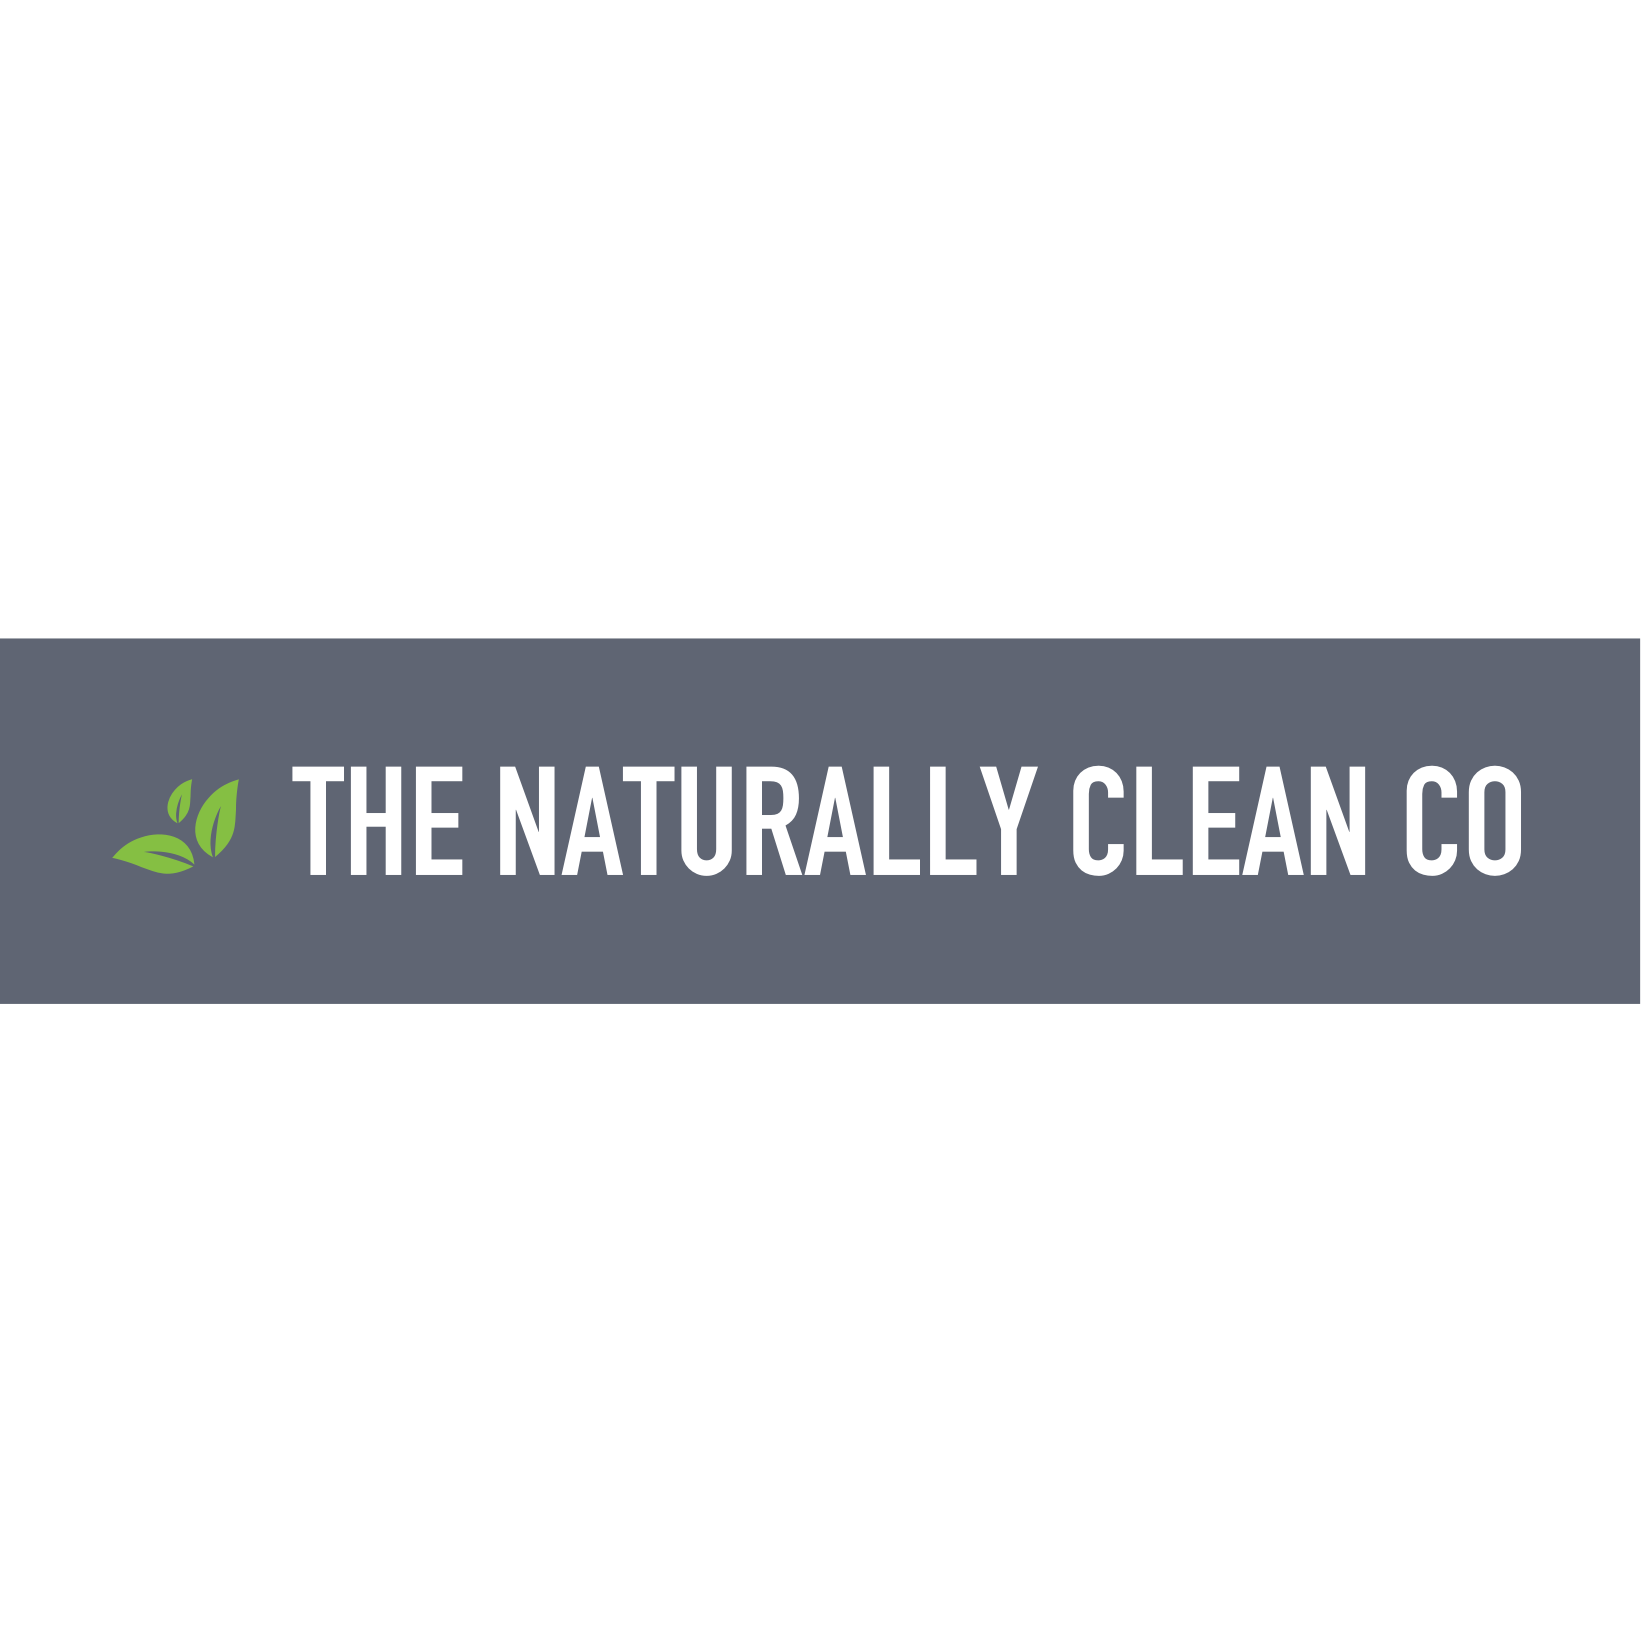 The Naturally Clean Co Wynnum 1800 331 745